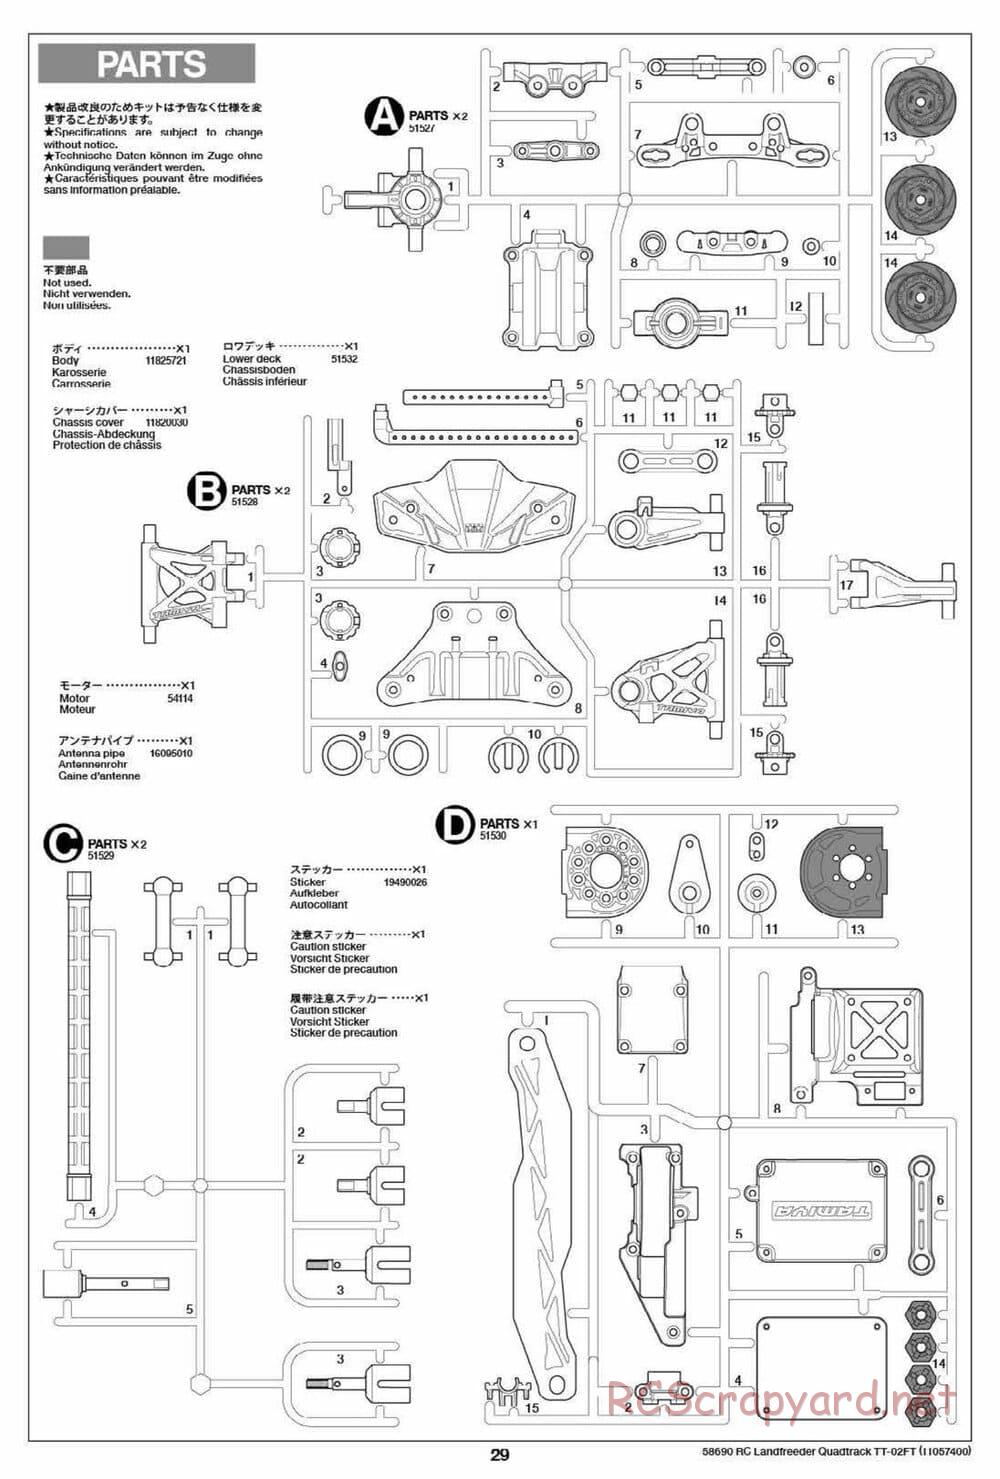 Tamiya - Landfreeder Quadtrack - TT-02FT Chassis - Manual - Page 29